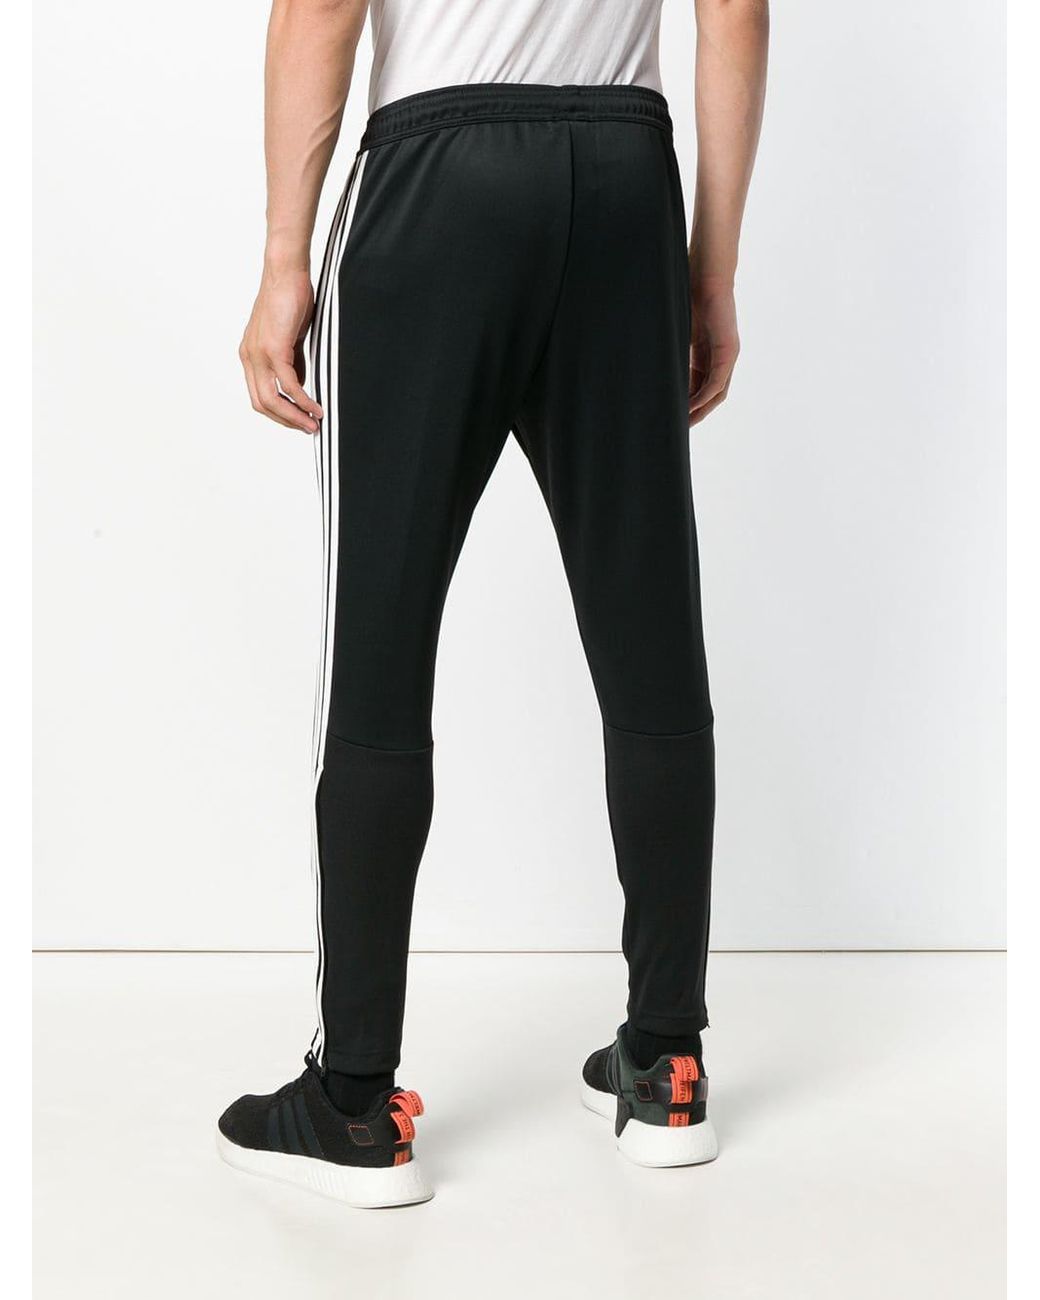 Gosha Rubchinskiy X Adidas Slim-fit Track Pants in Black for Men | Lyst